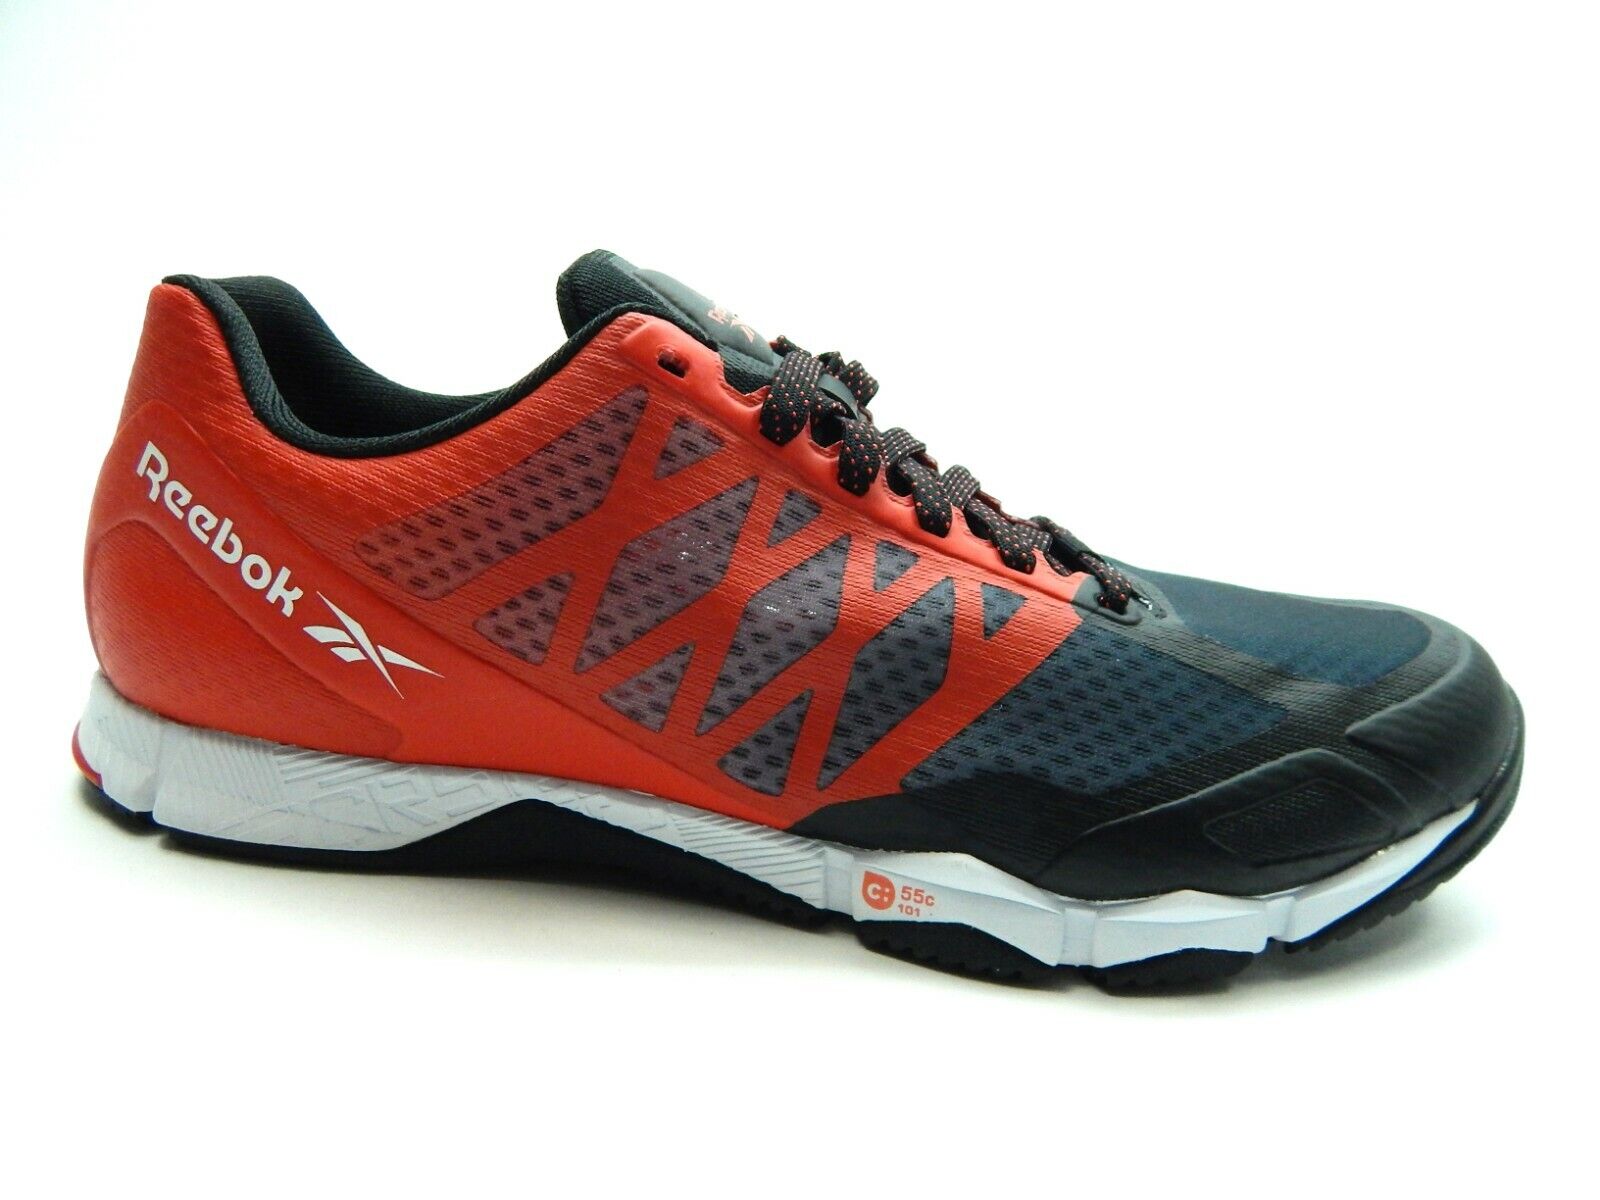 Reebok Speed training Black red Men shoes size 12 | eBay